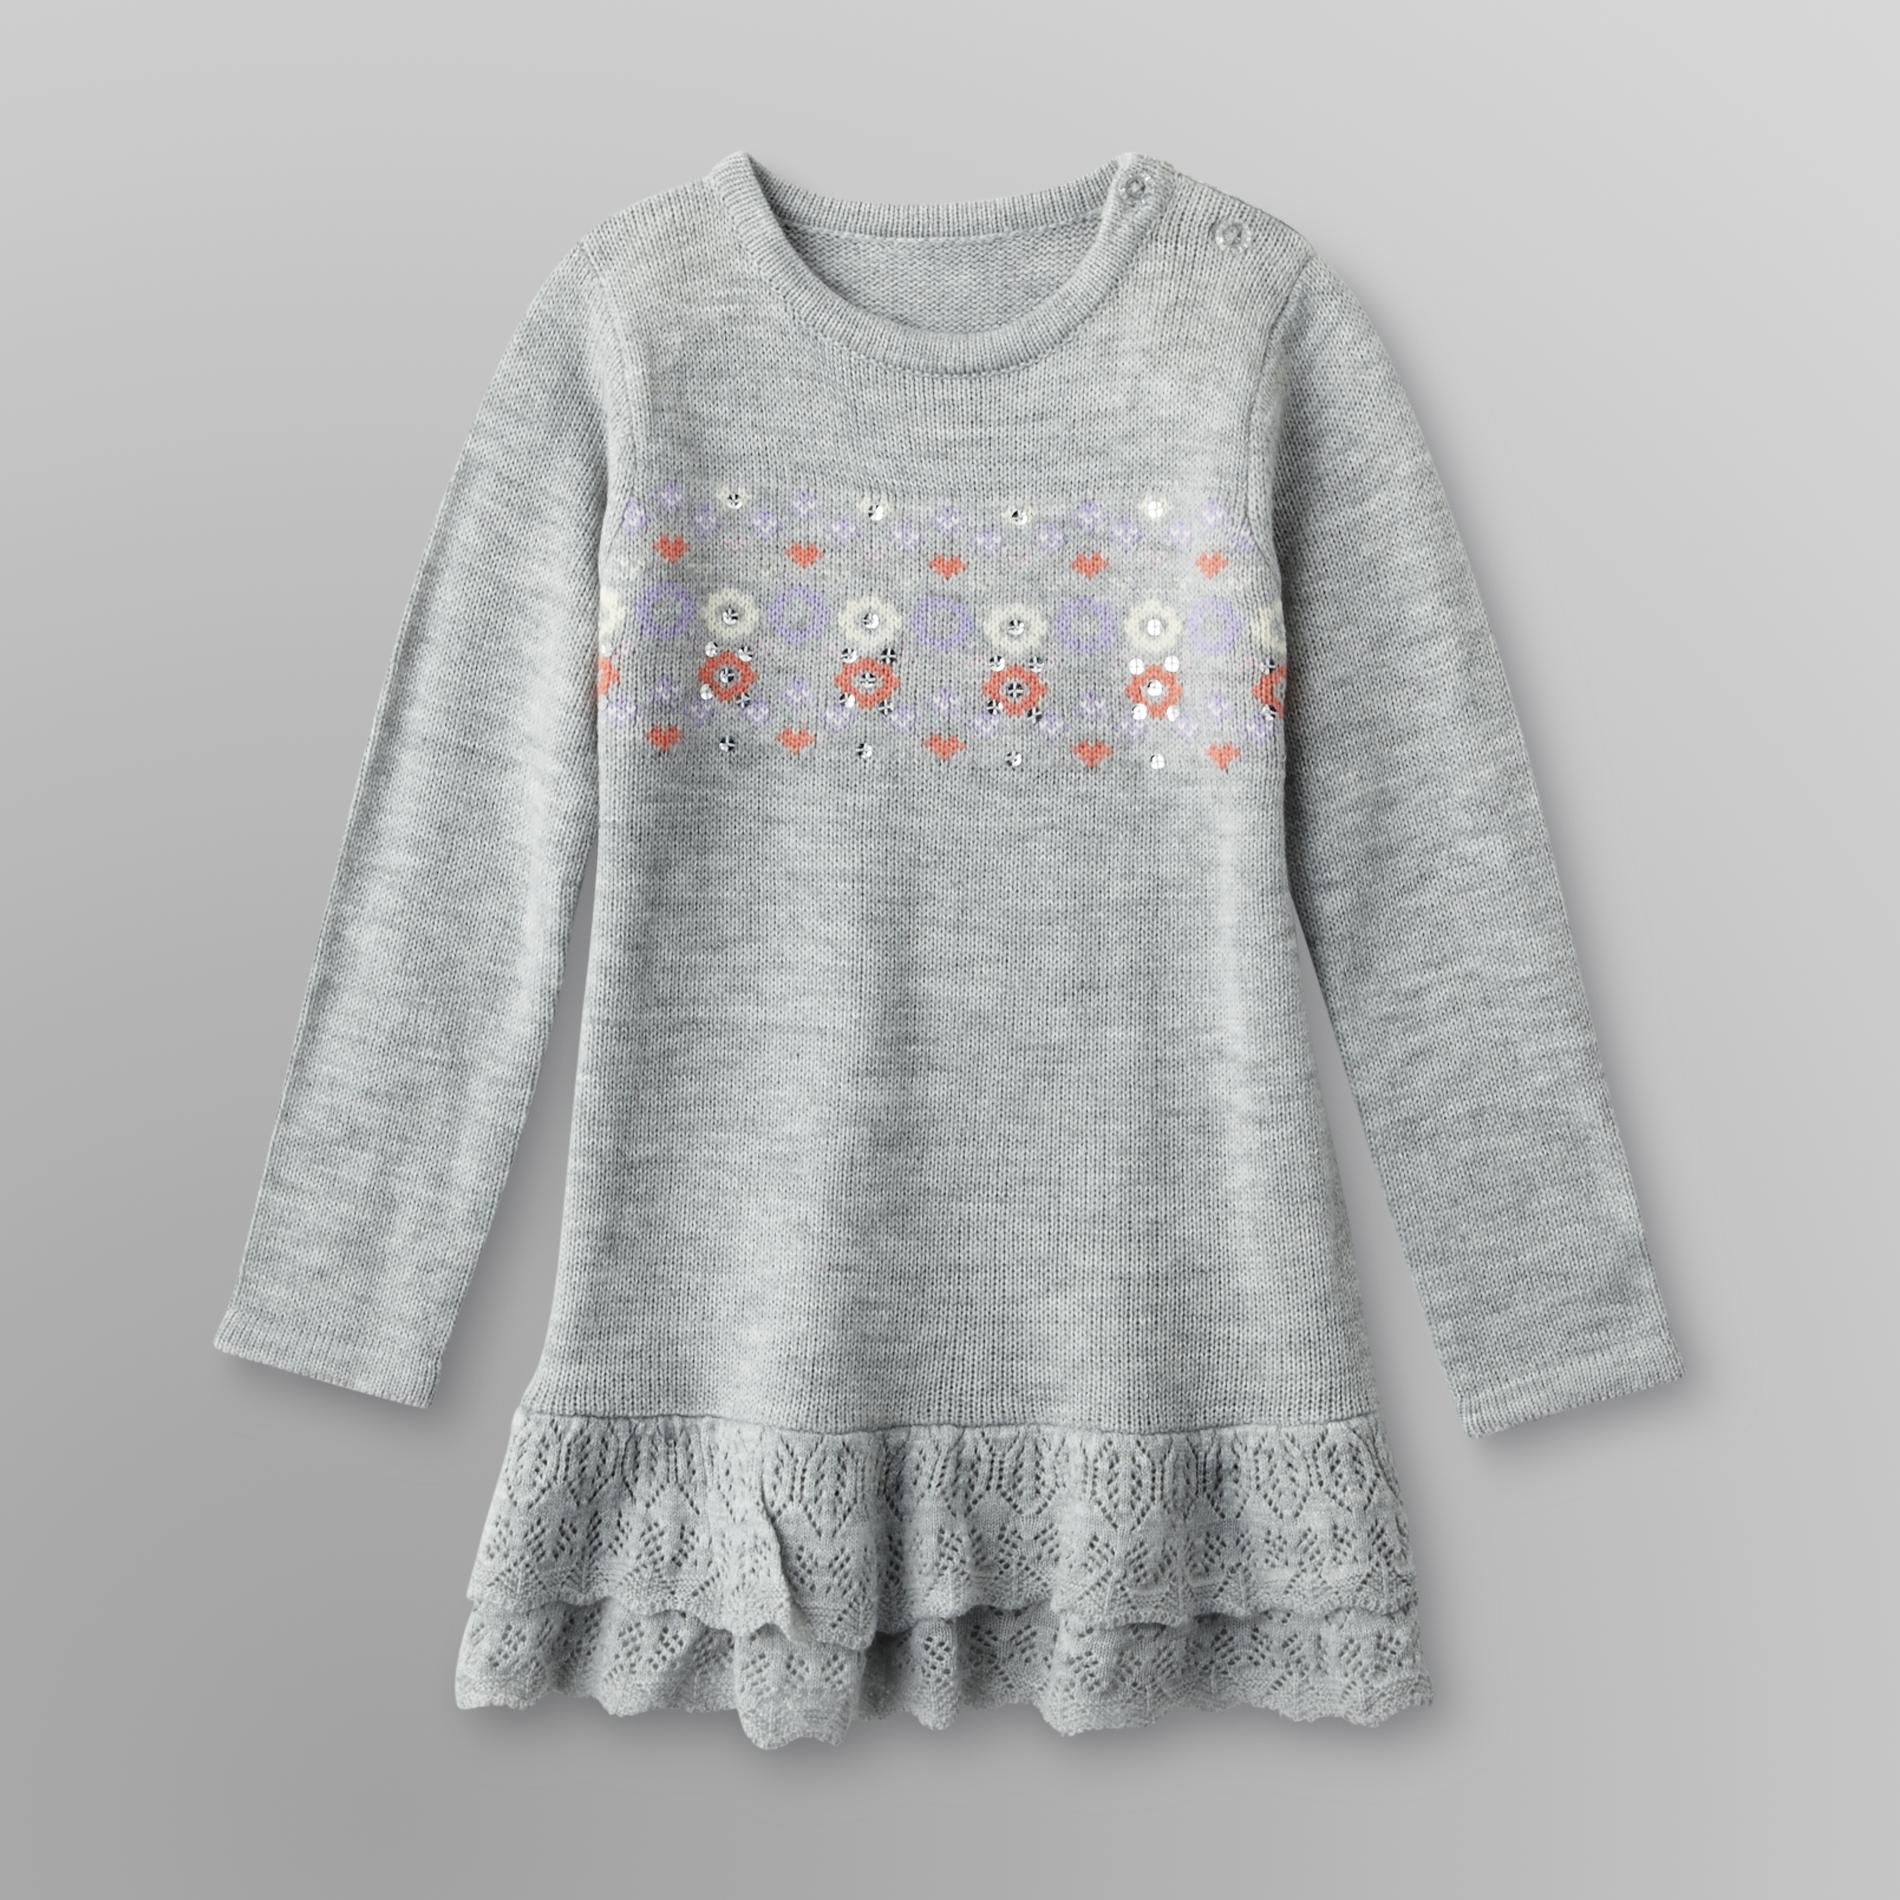 Route 66 Infant Girl's Sweater Dress - Fair Isle